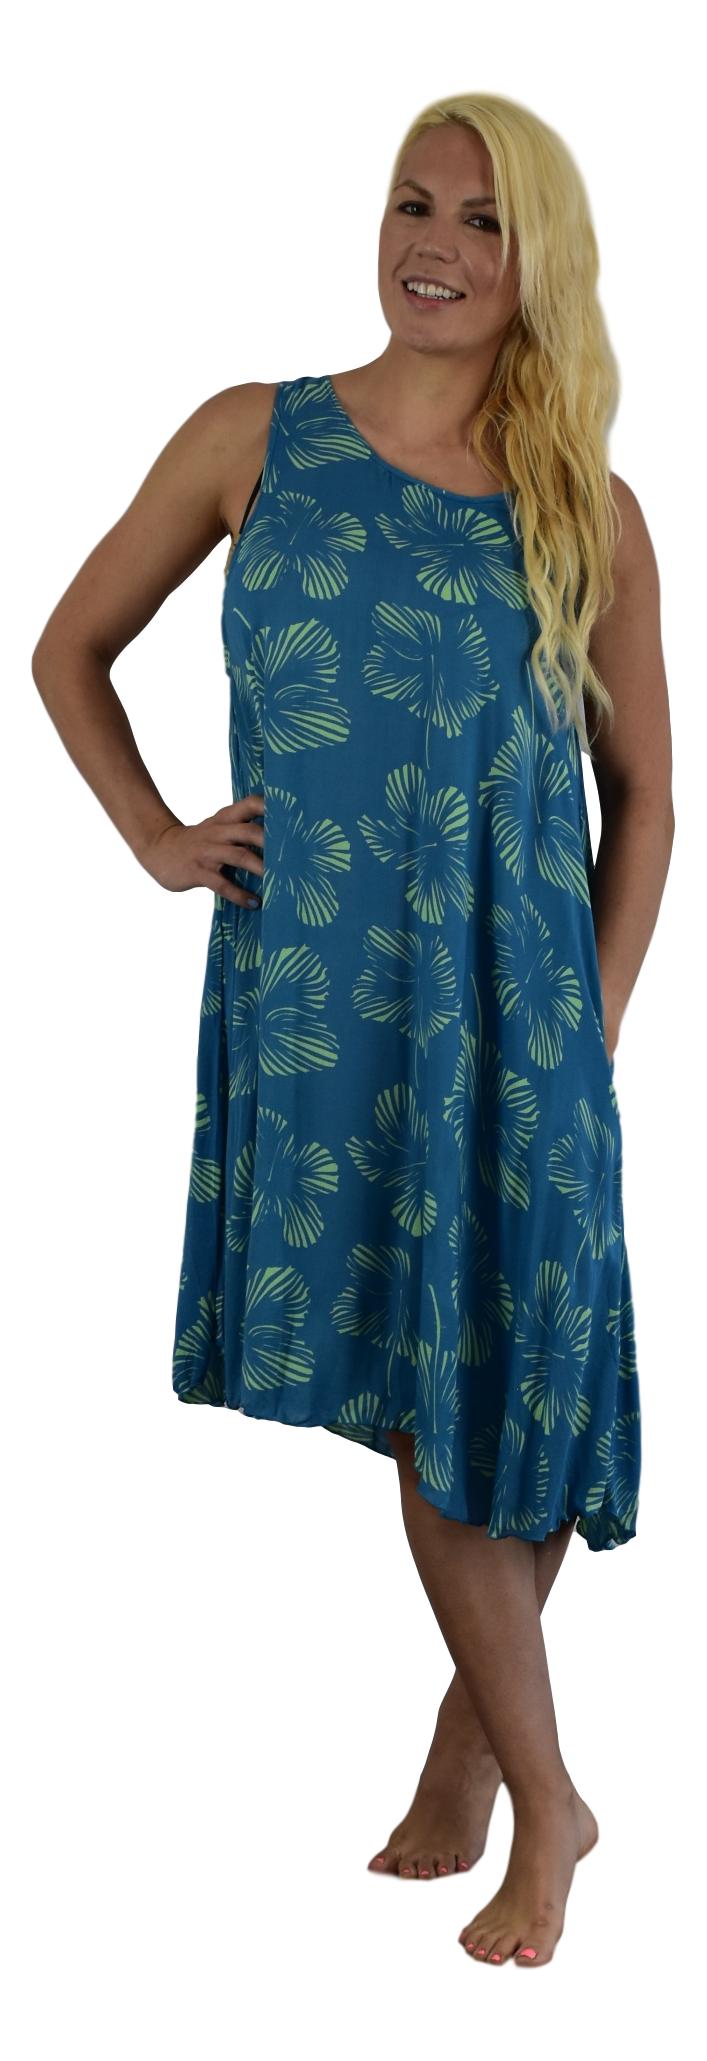 Secret Beach - Cabana Dress - New Hibiscus - Palace Blue / Nile Green